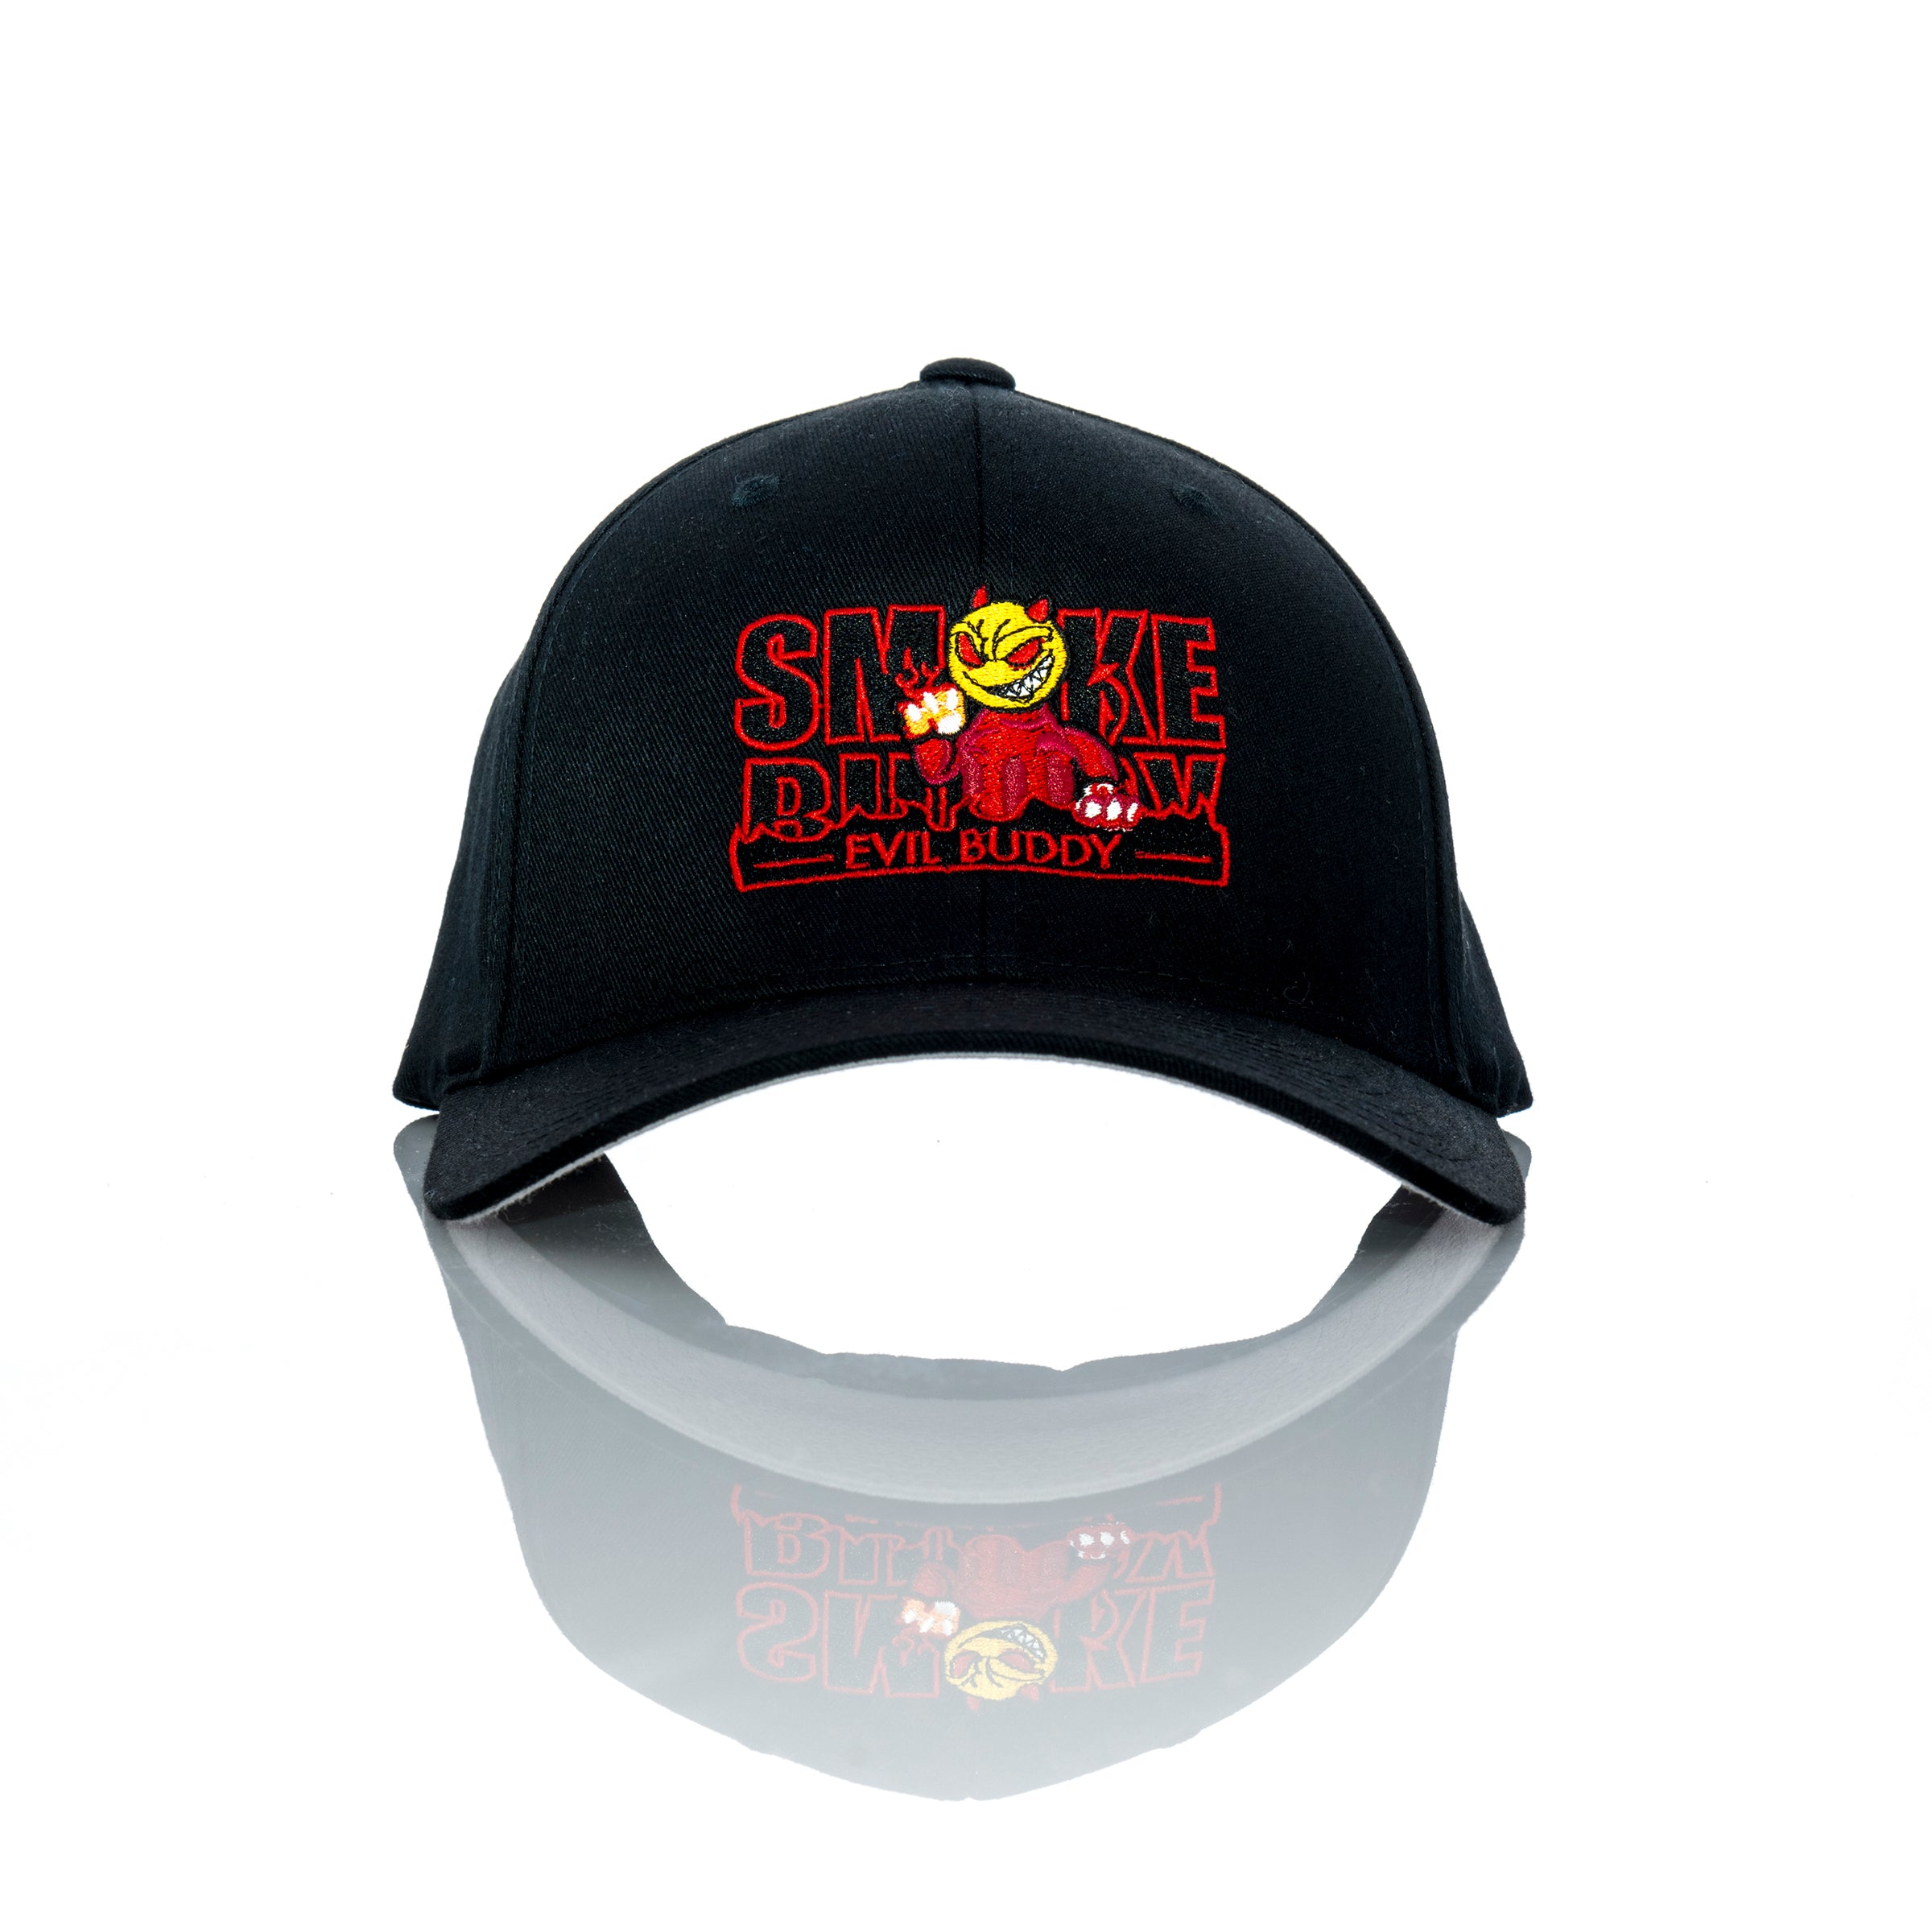 Smokebuddy Evil Buddy Flexfit Hat Black